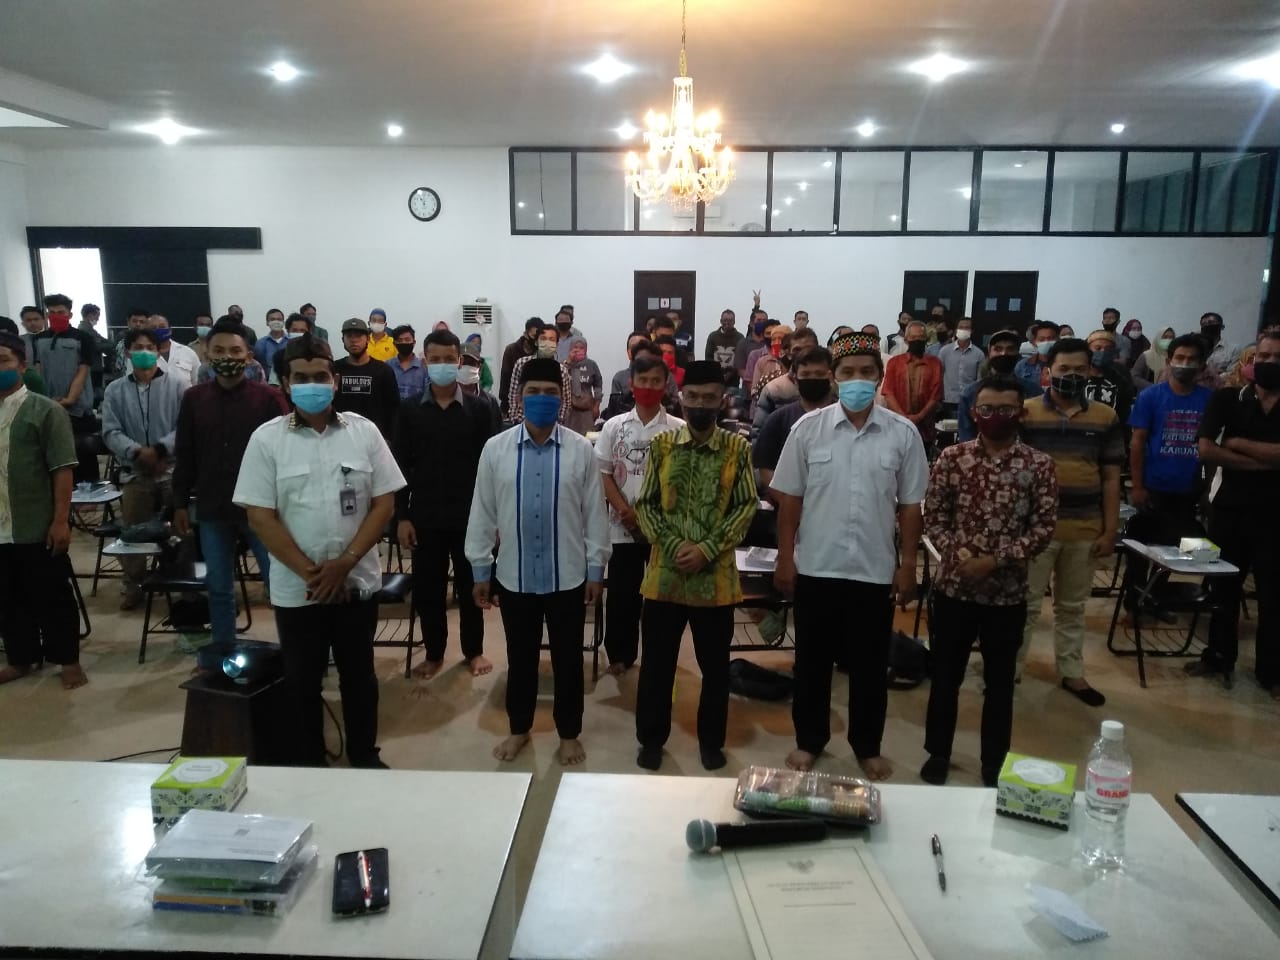 Senator Abdul Hakim usai acara sosialisasi kebangsaan di Lampung